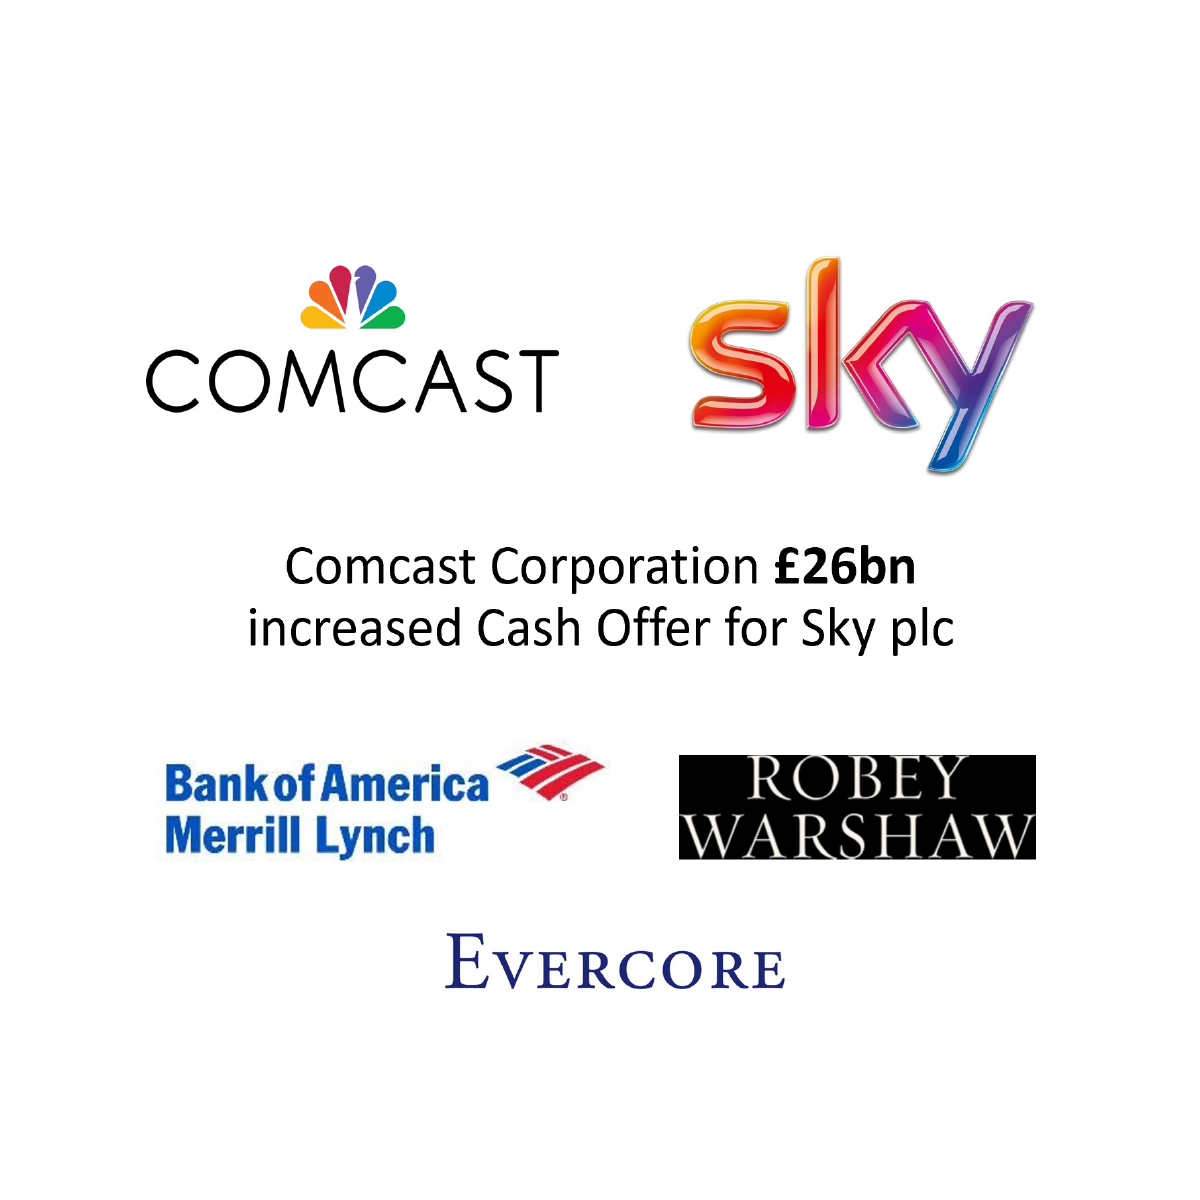 Comcast Corporation £26bn increased Cash Offer for Sky plc